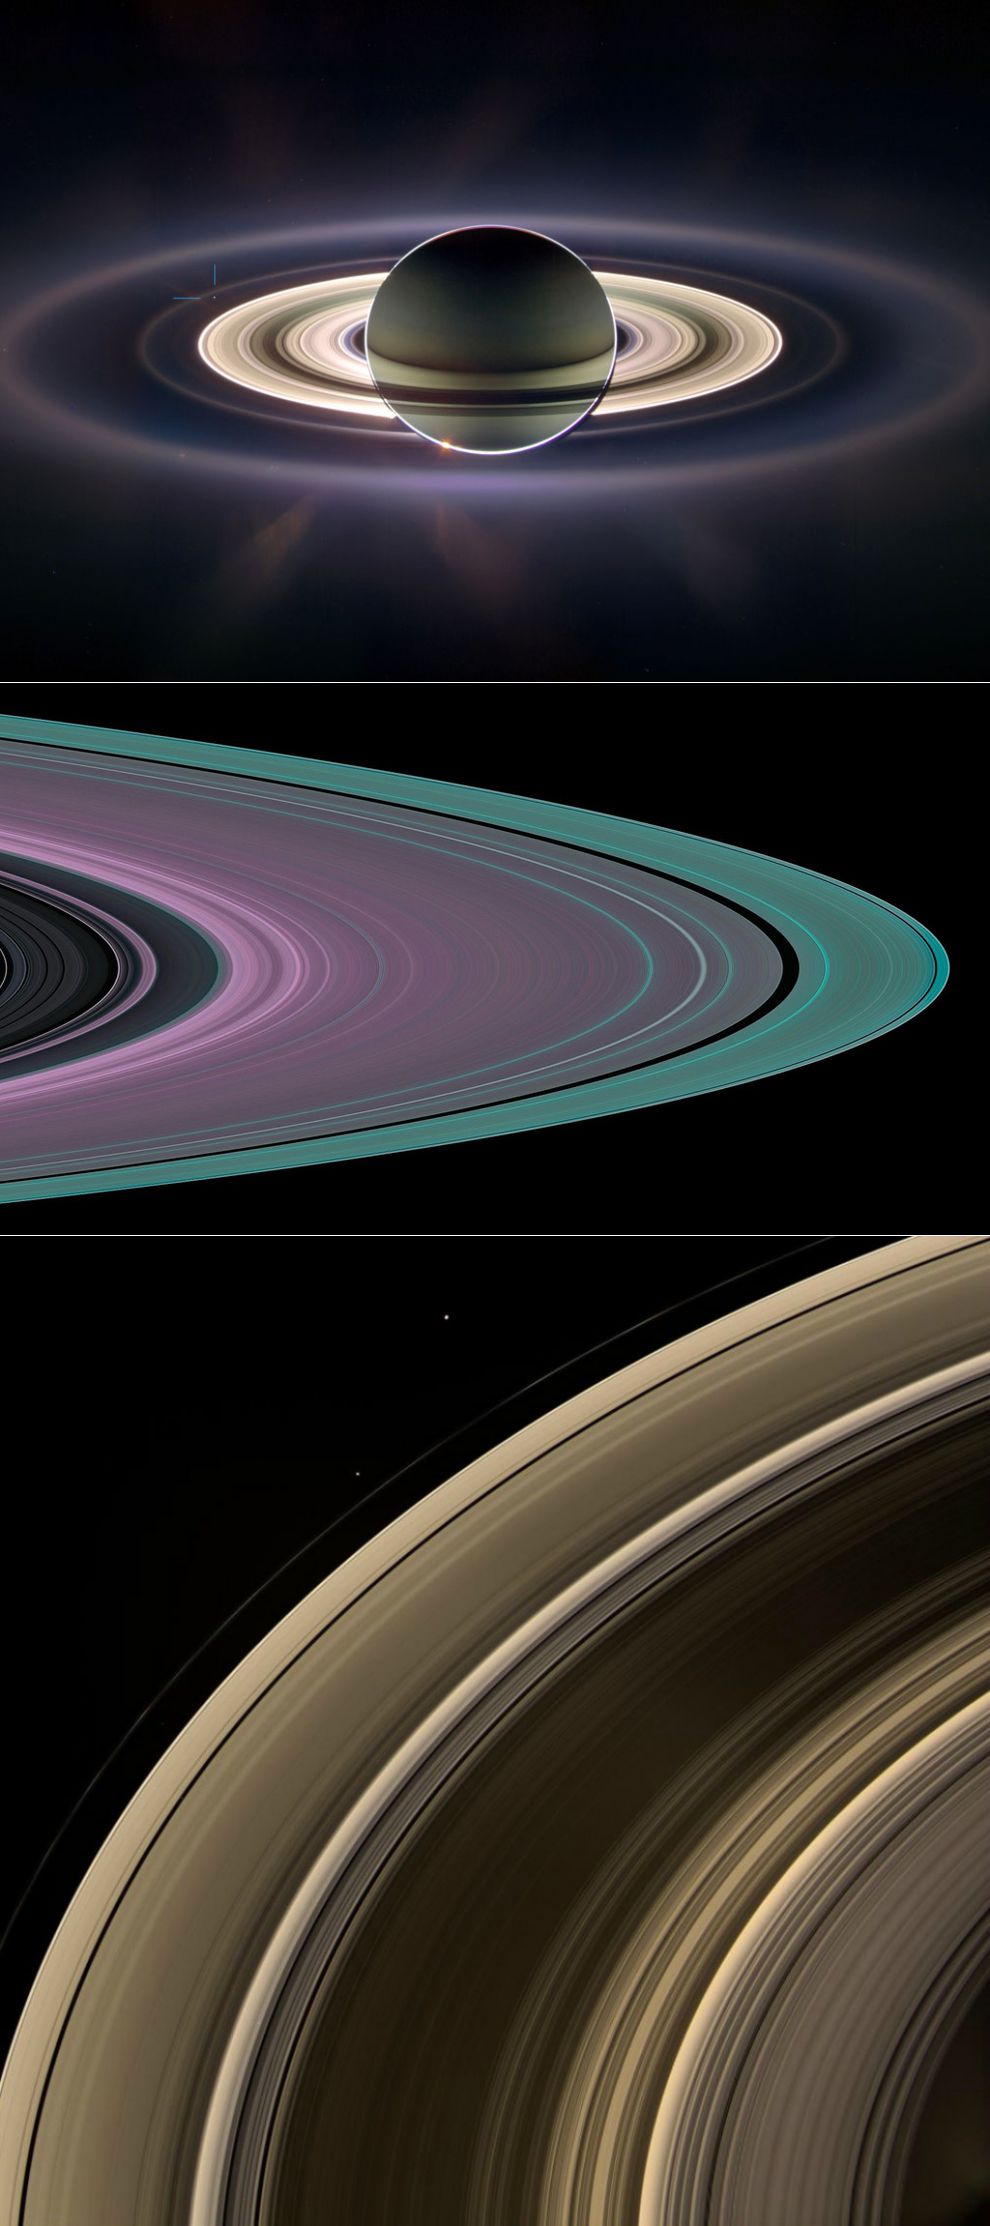 Какого цвета кольца сатурна. Сатурн кольца Сатурна. Планета с кольцами Сатурн. Кольца Сатурна вблизи. Исчезновение колец Сатурна.